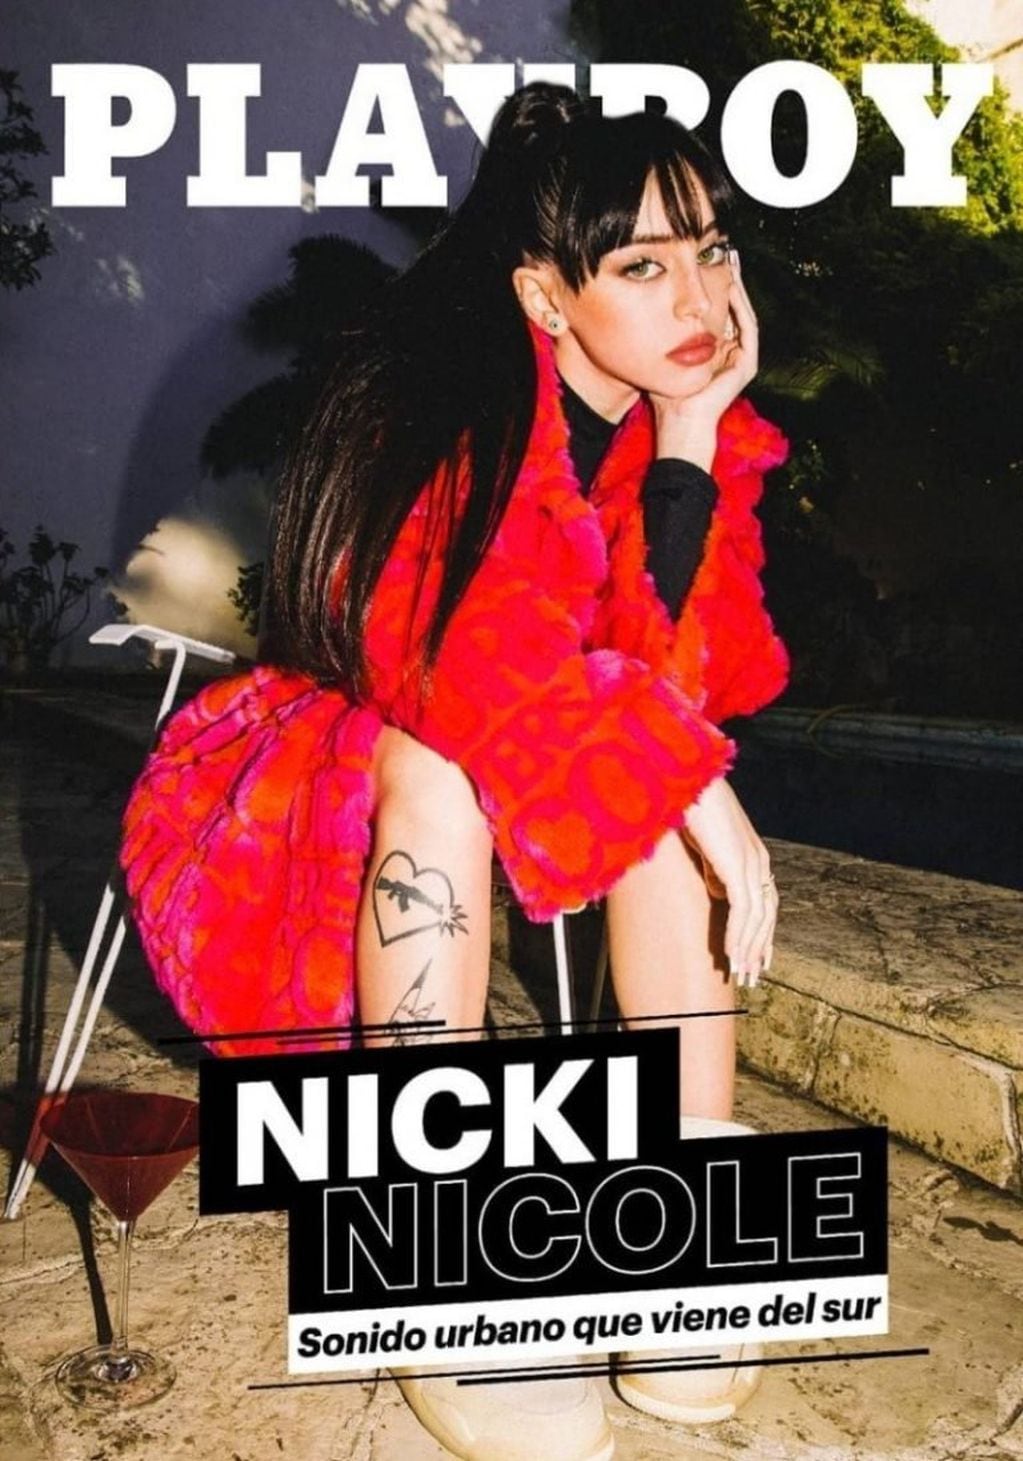 La rosarina Nicki Nicole llegó a la tapa de Playboy